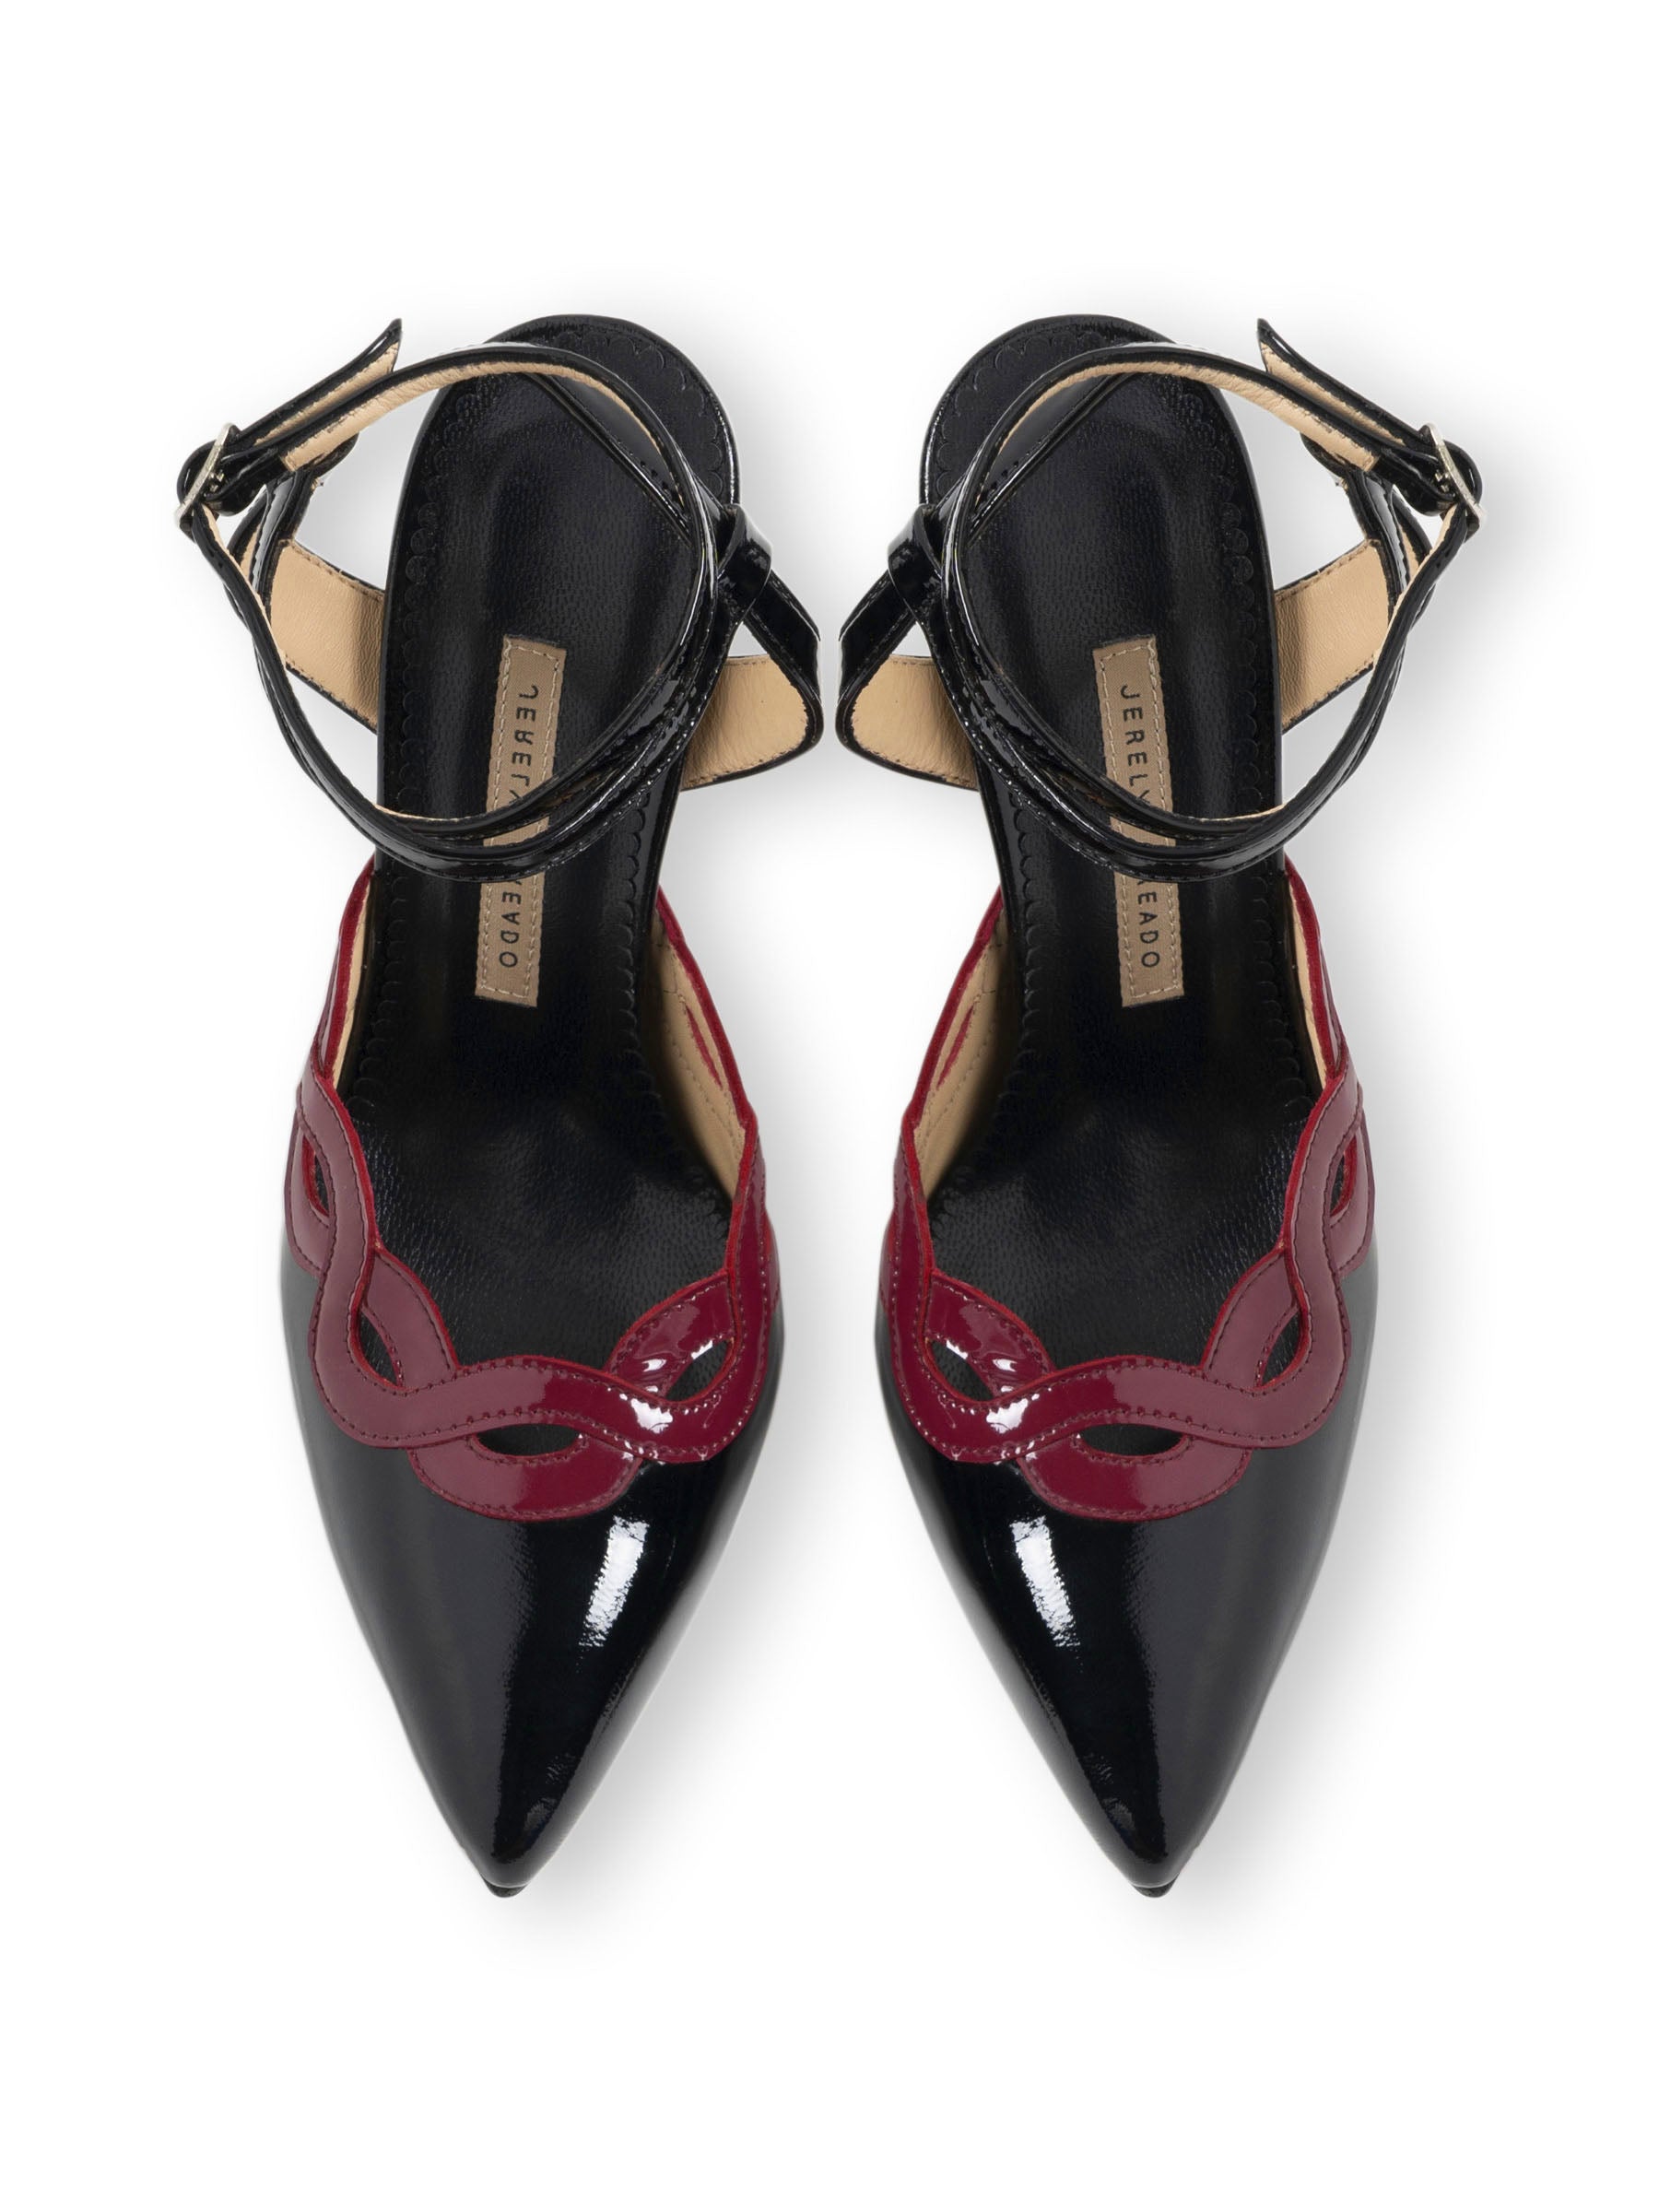 Jerelyn Creado LOLA NERO 9.5cm Italian Leather Heels